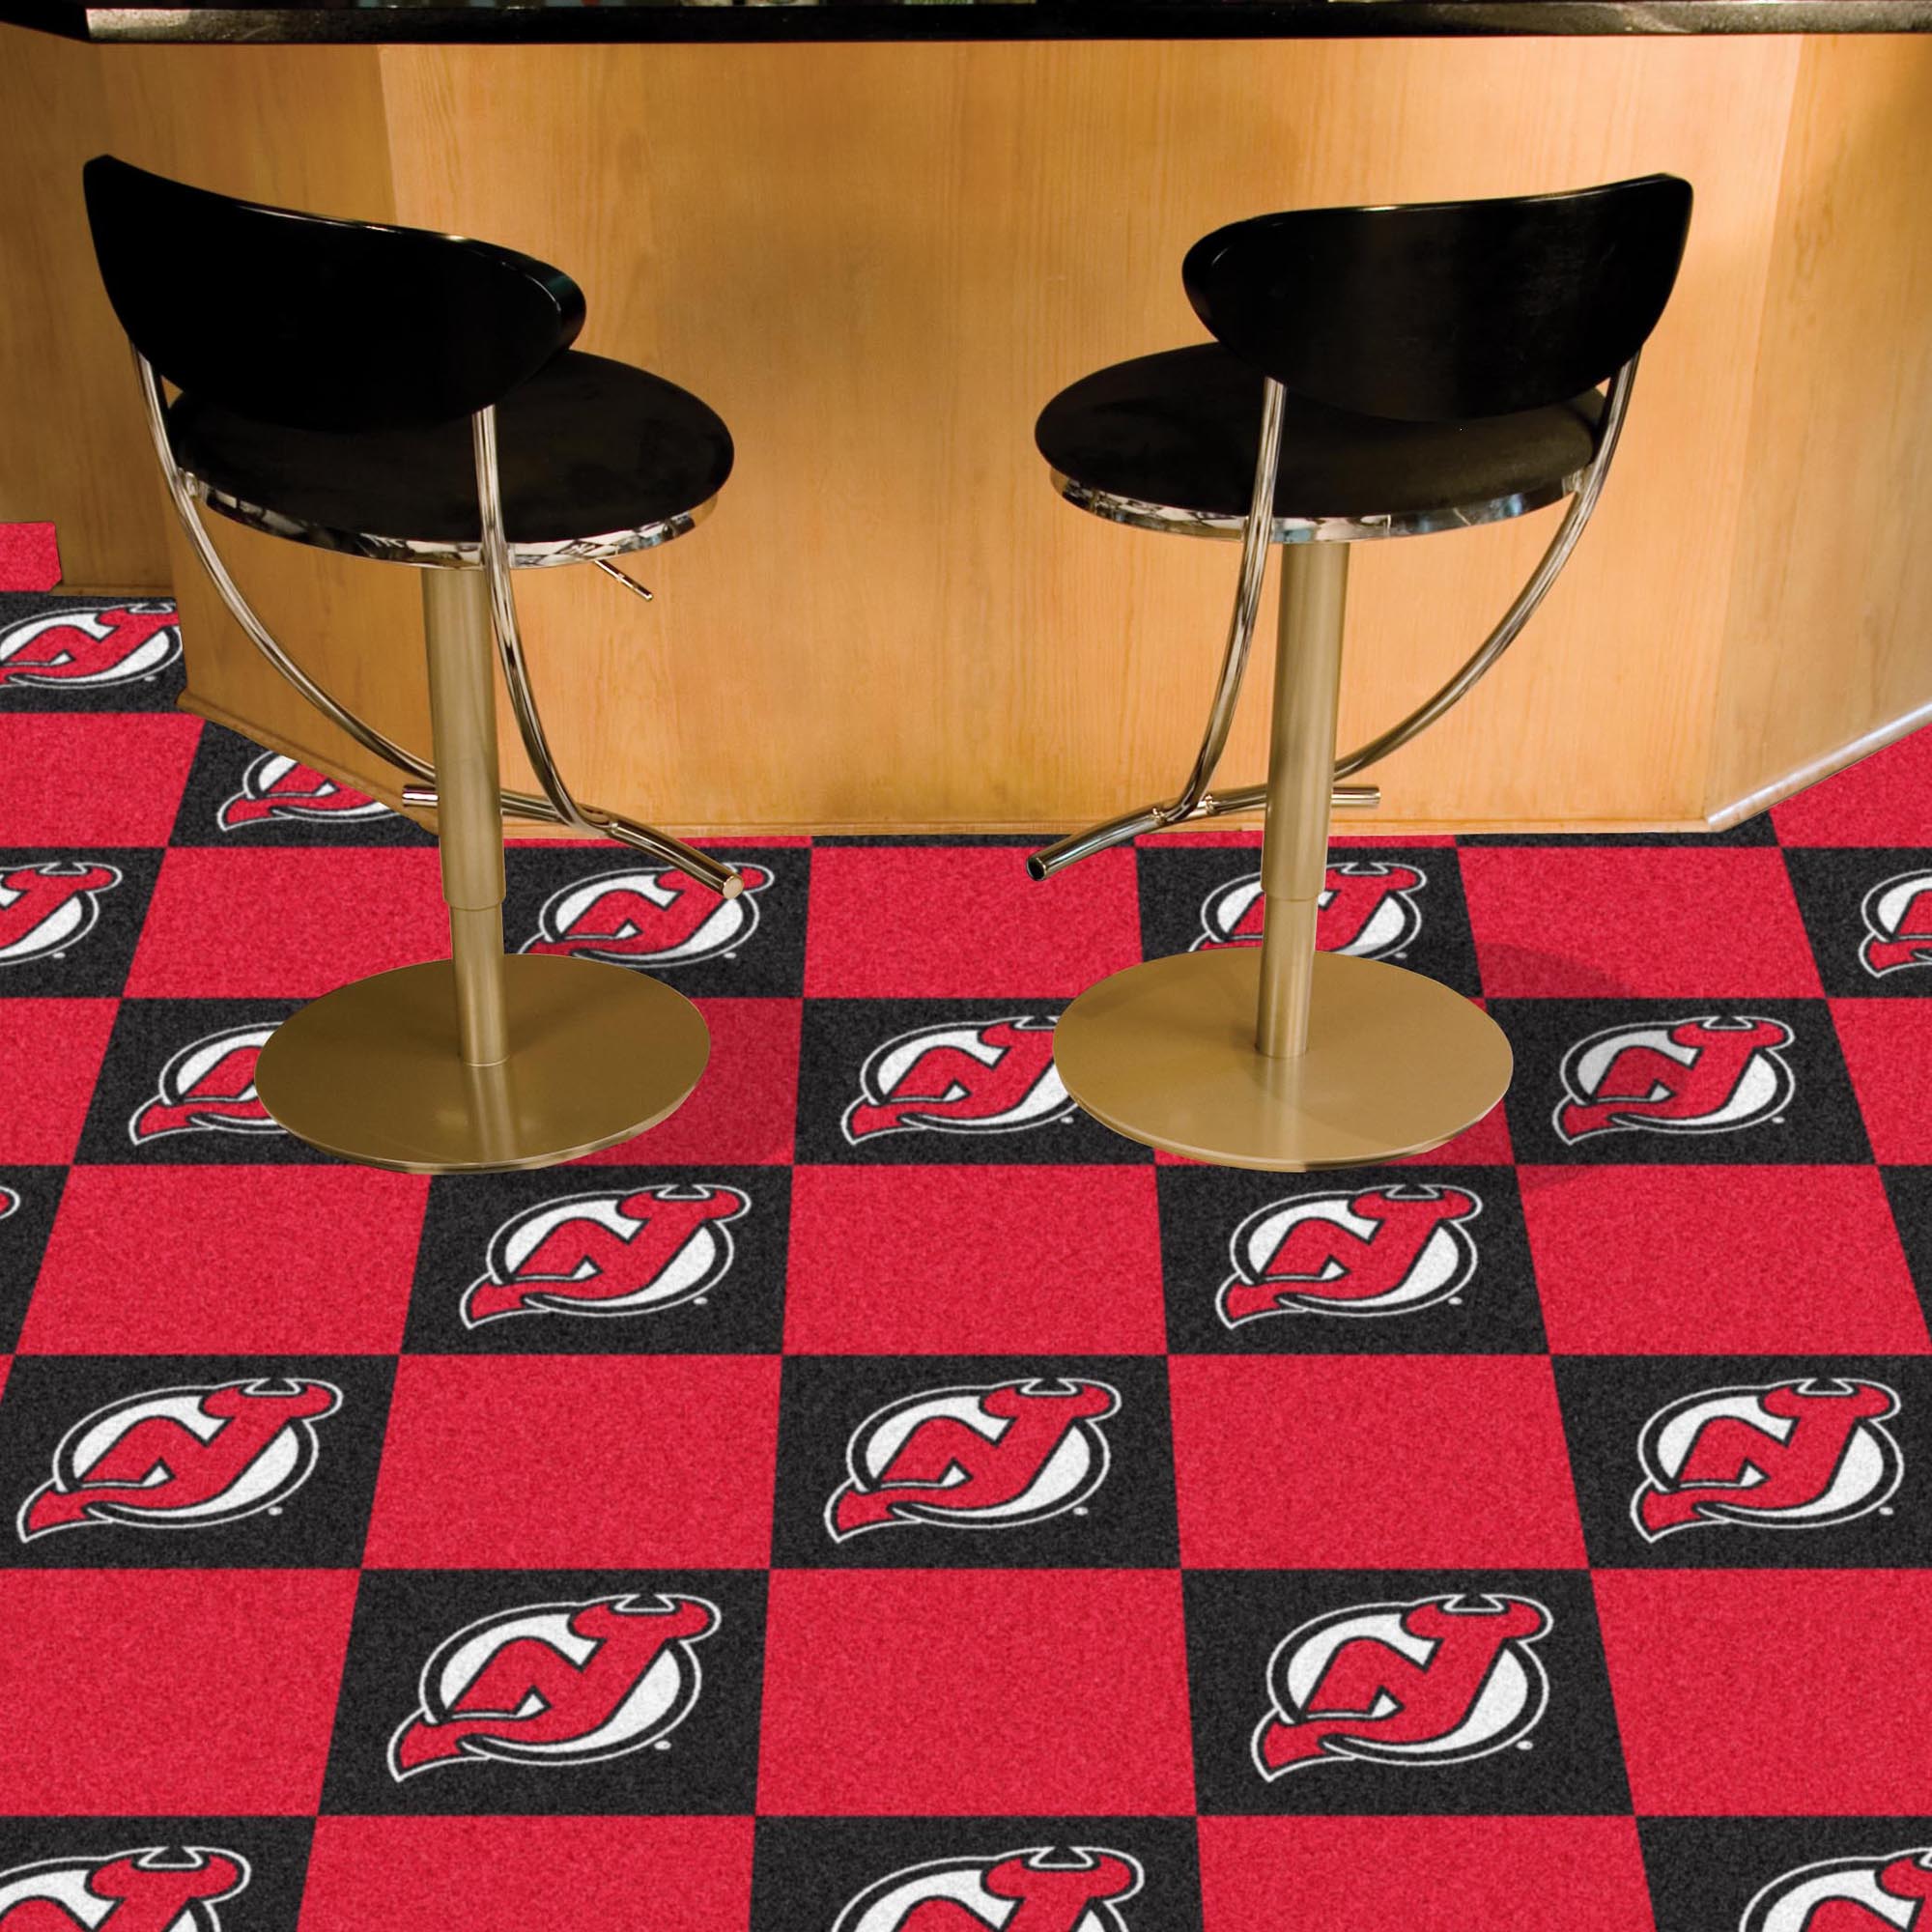 New Jersey Devils Carpet Tiles 18x18 in.